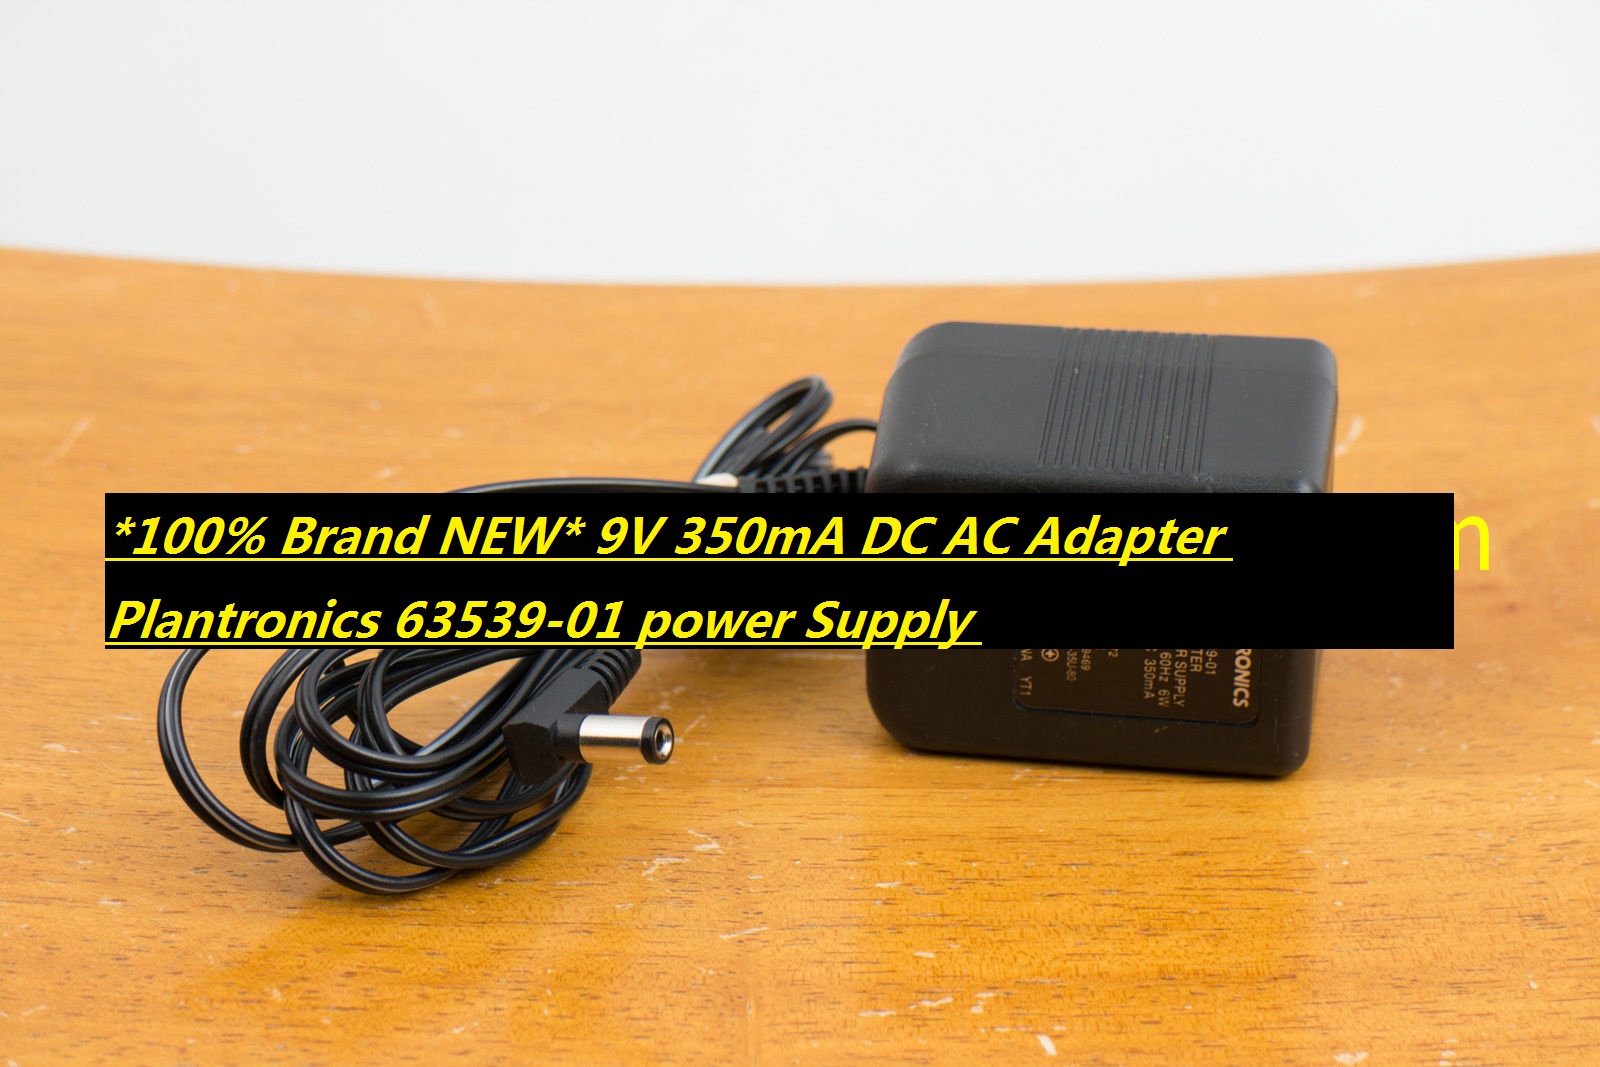 *100% Brand NEW* 9V 350mA DC AC Adapter Plantronics 63539-01 power Supply - Click Image to Close